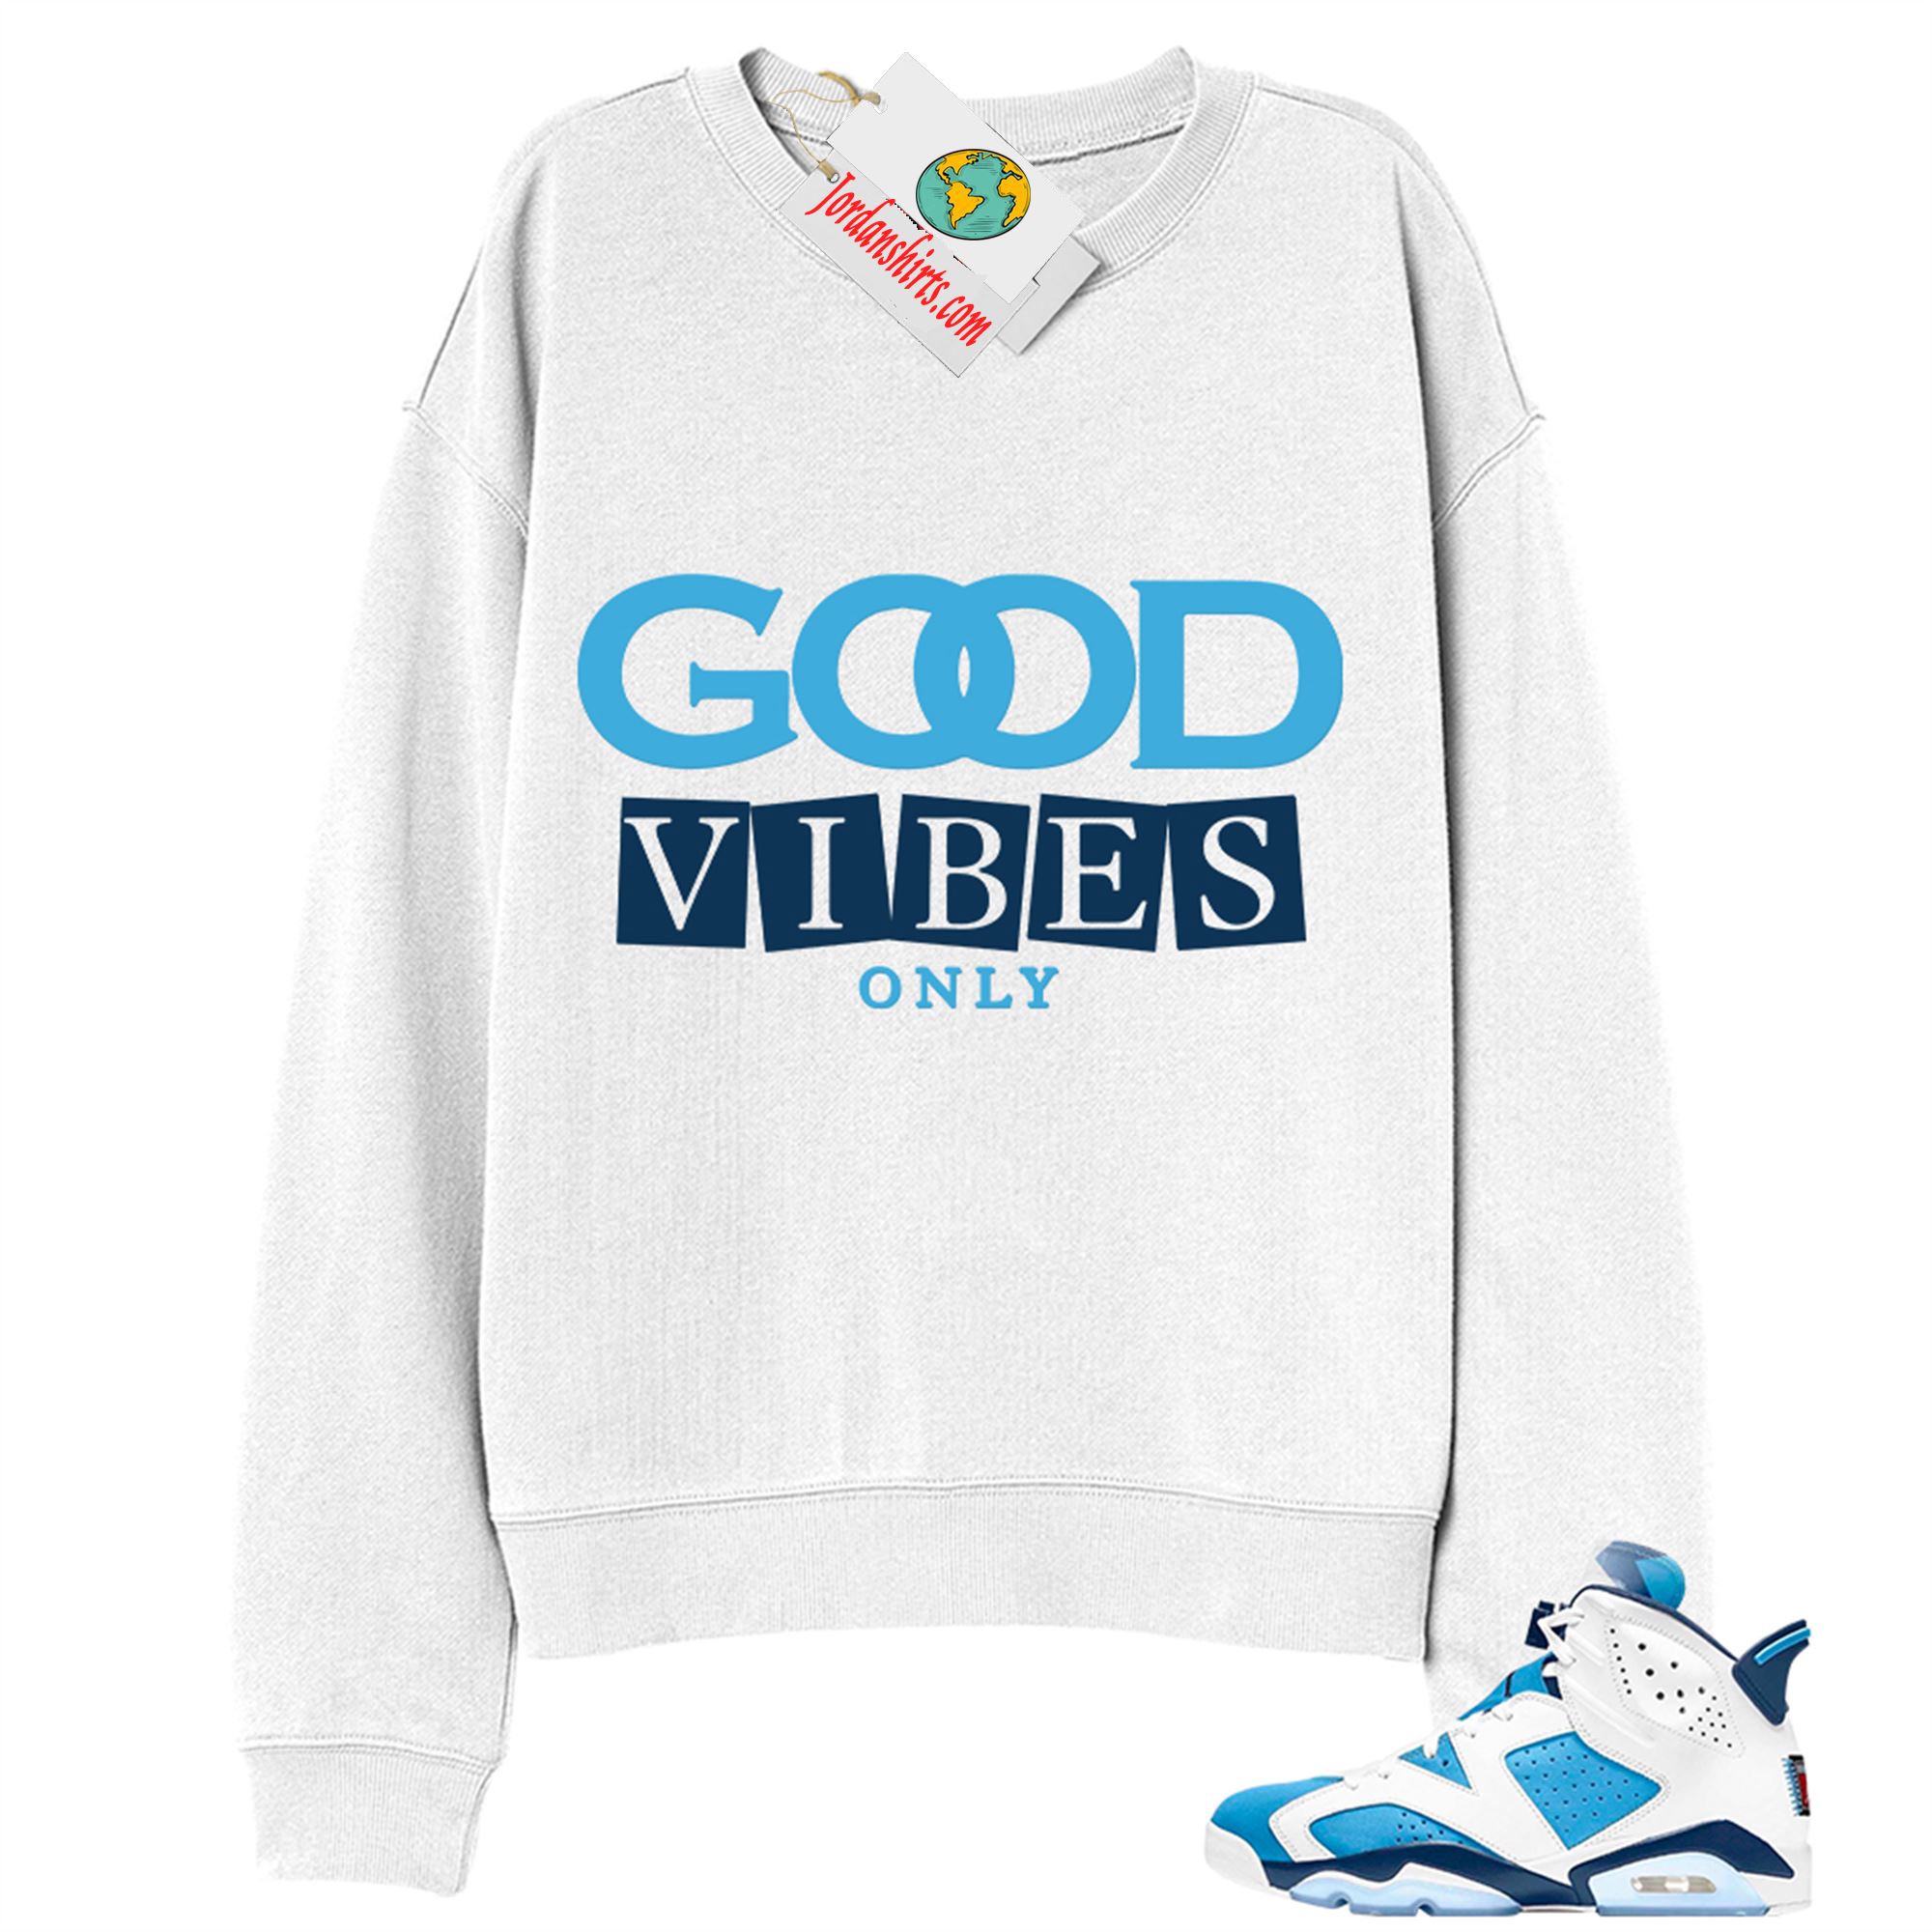 Jordan 6 Sweatshirt, Good Vibes Only White Sweatshirt Air Jordan 6 Unc 6s Full Size Up To 5xl